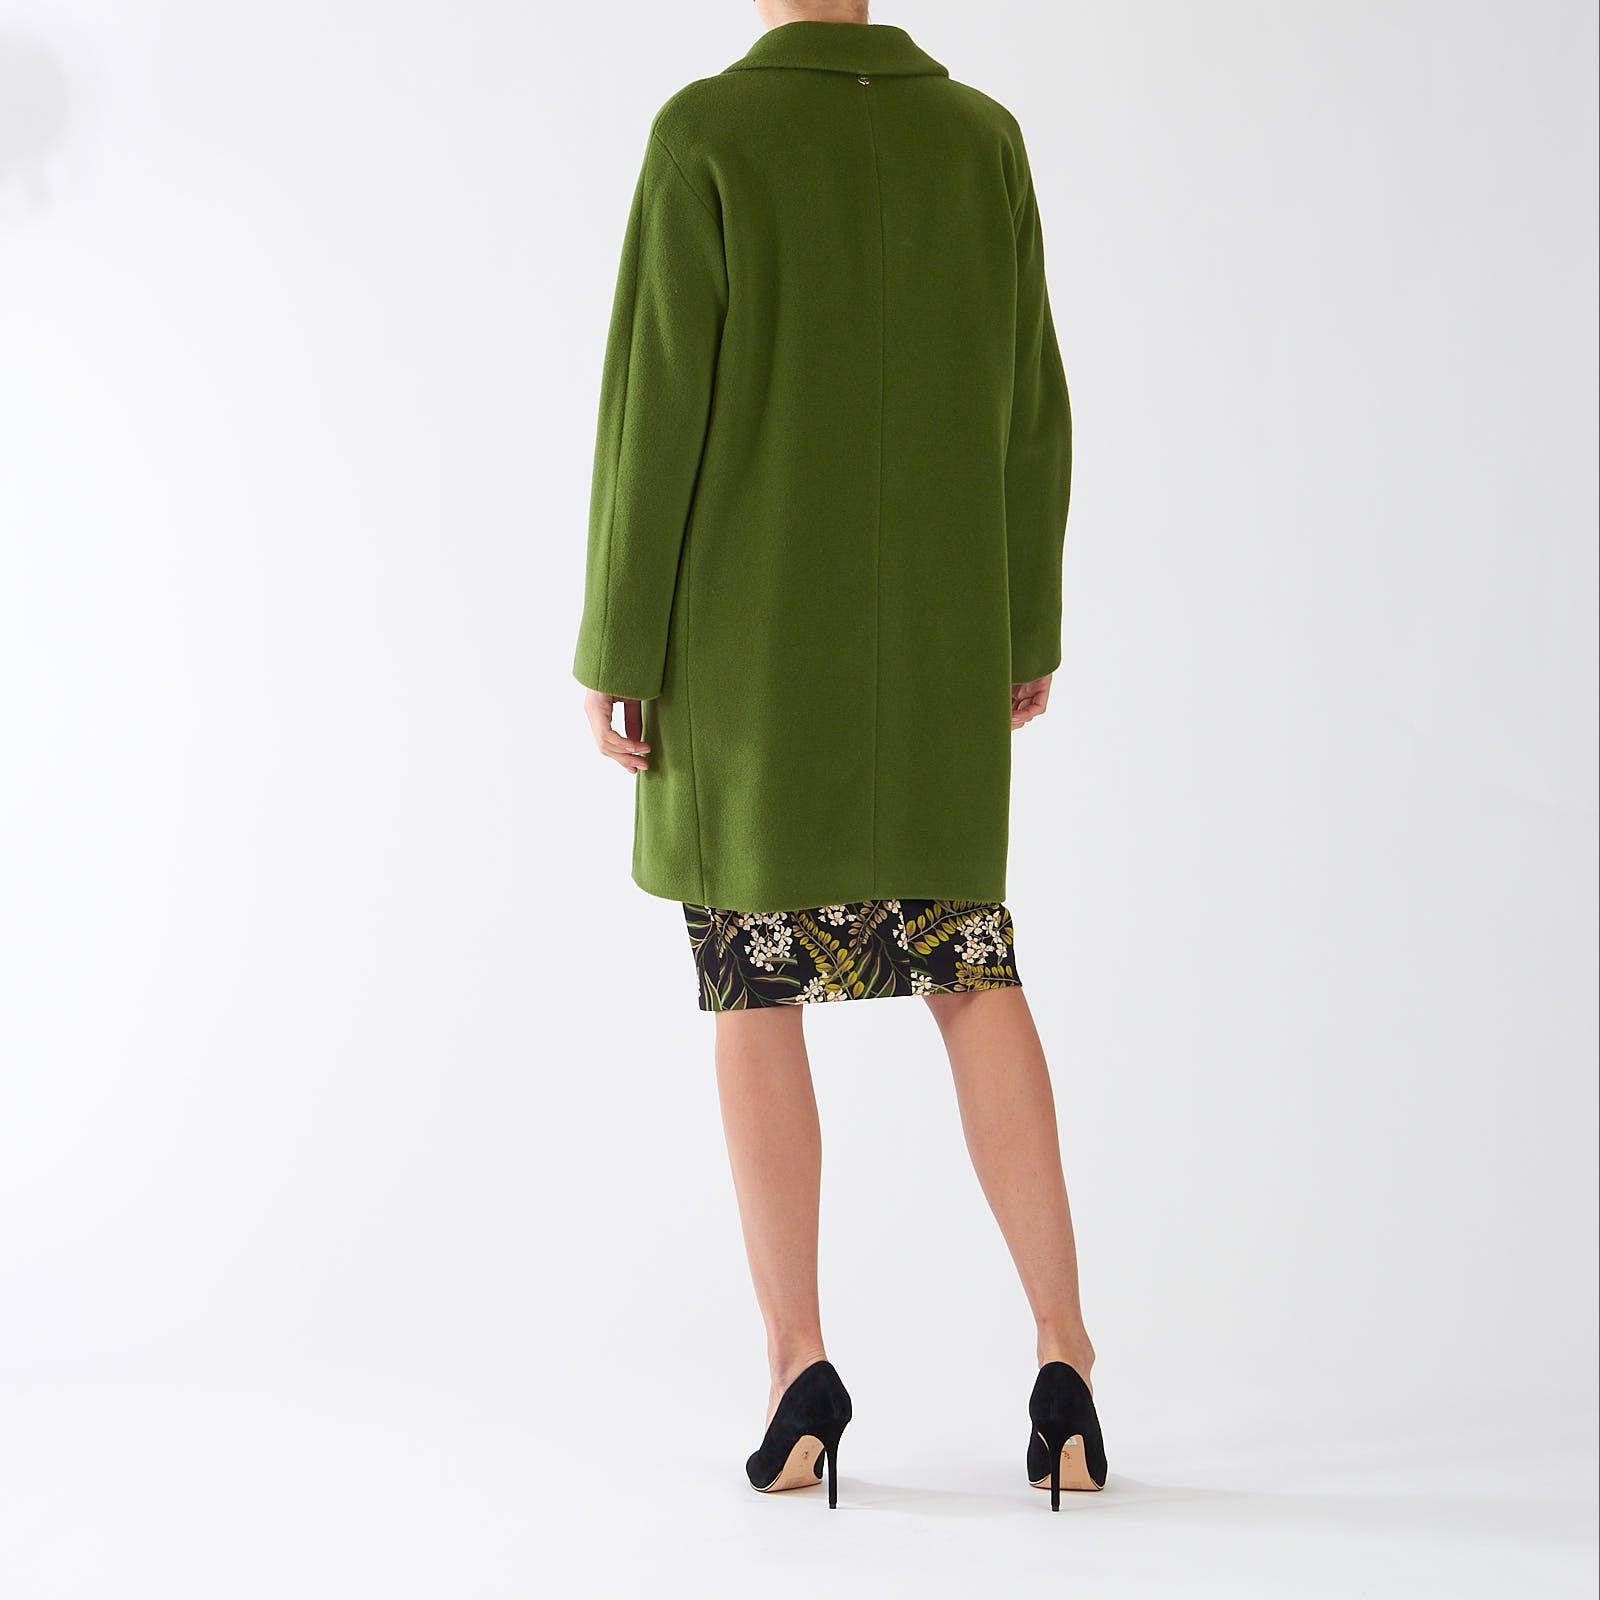 Orient Green Wool Blend Coat